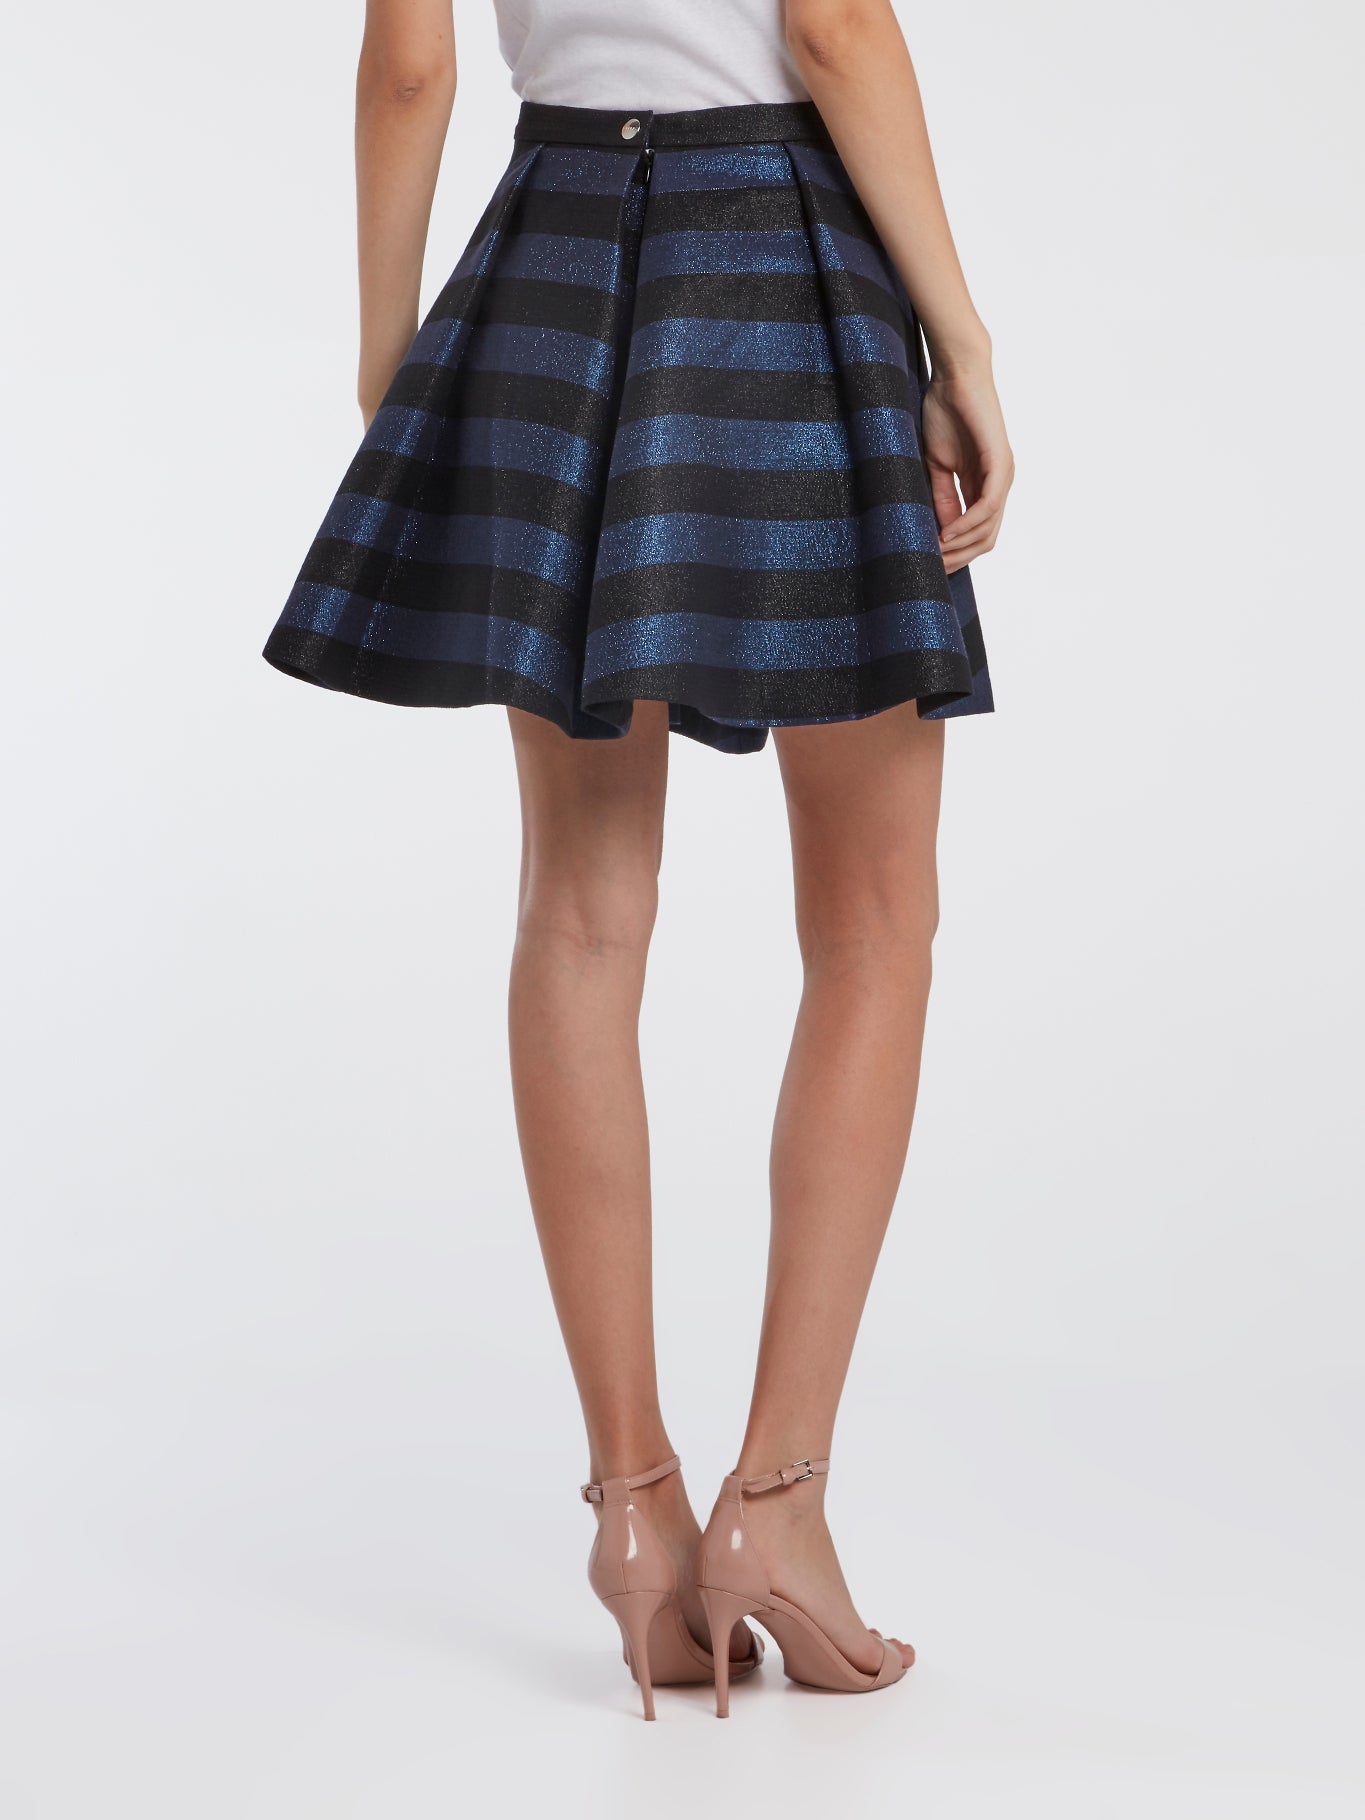 Striped Pleated Mini Skirt